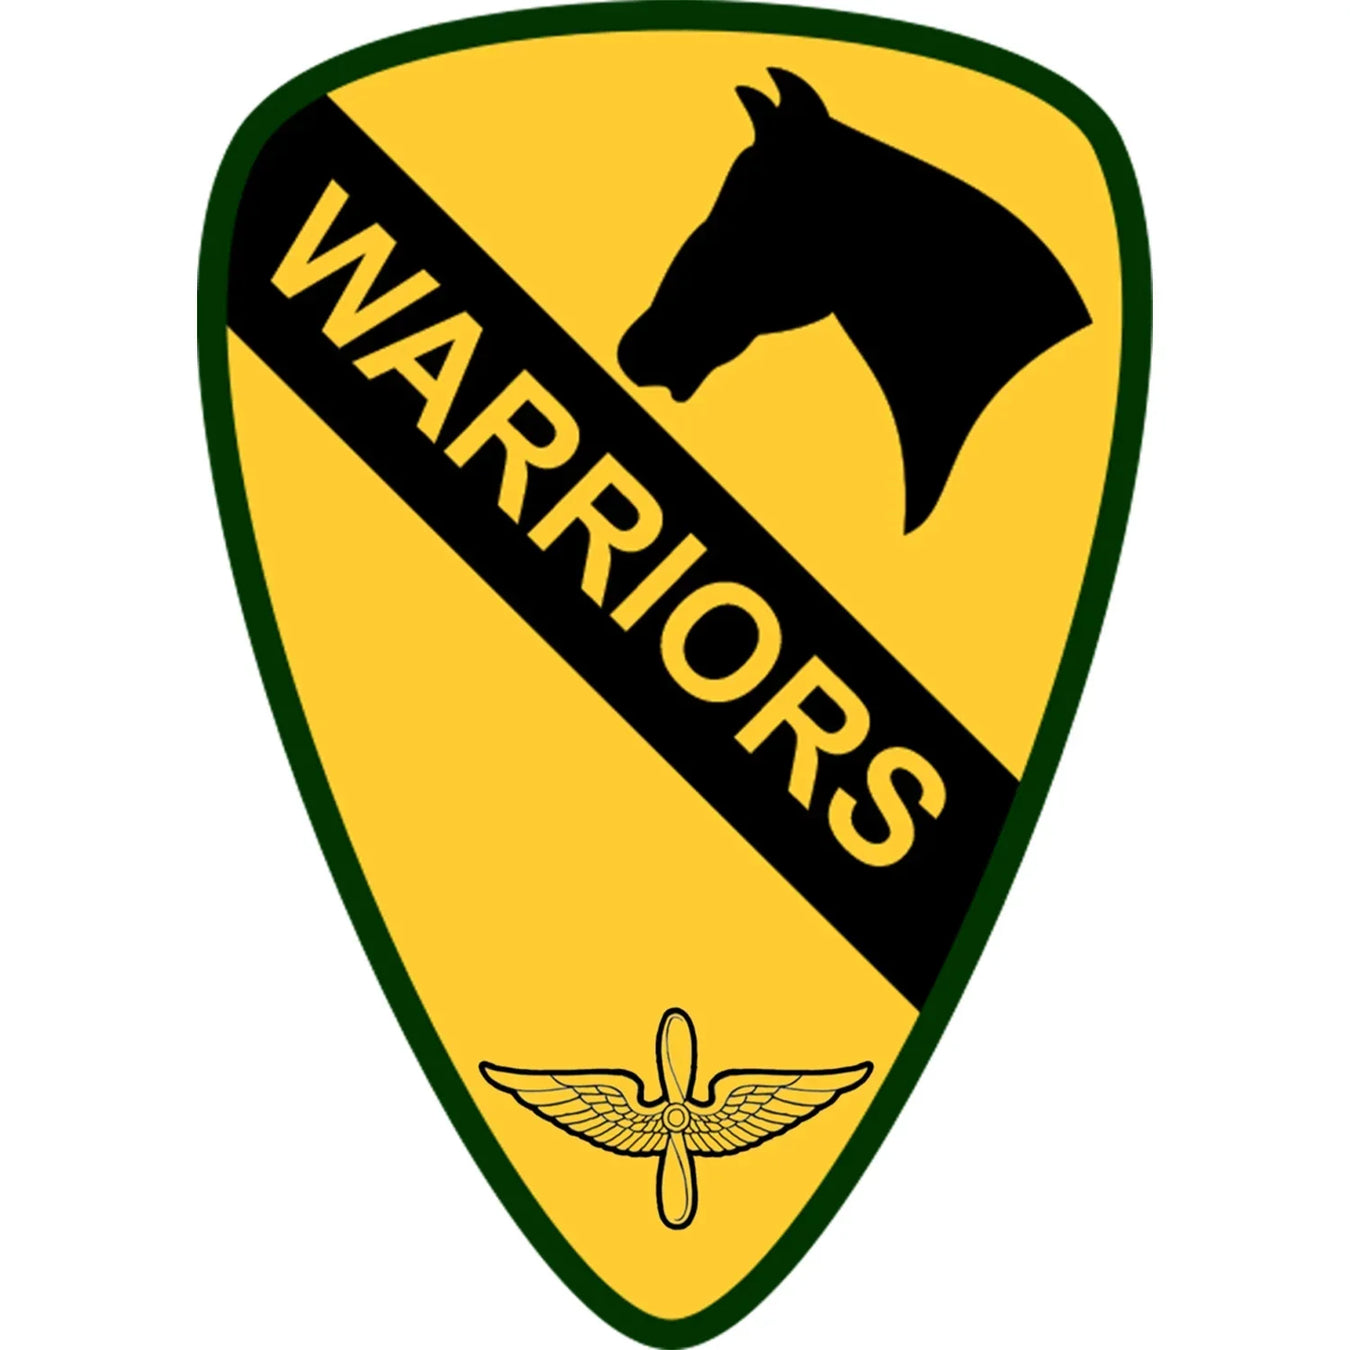 1st Air Cavalry Brigade "Warriors"